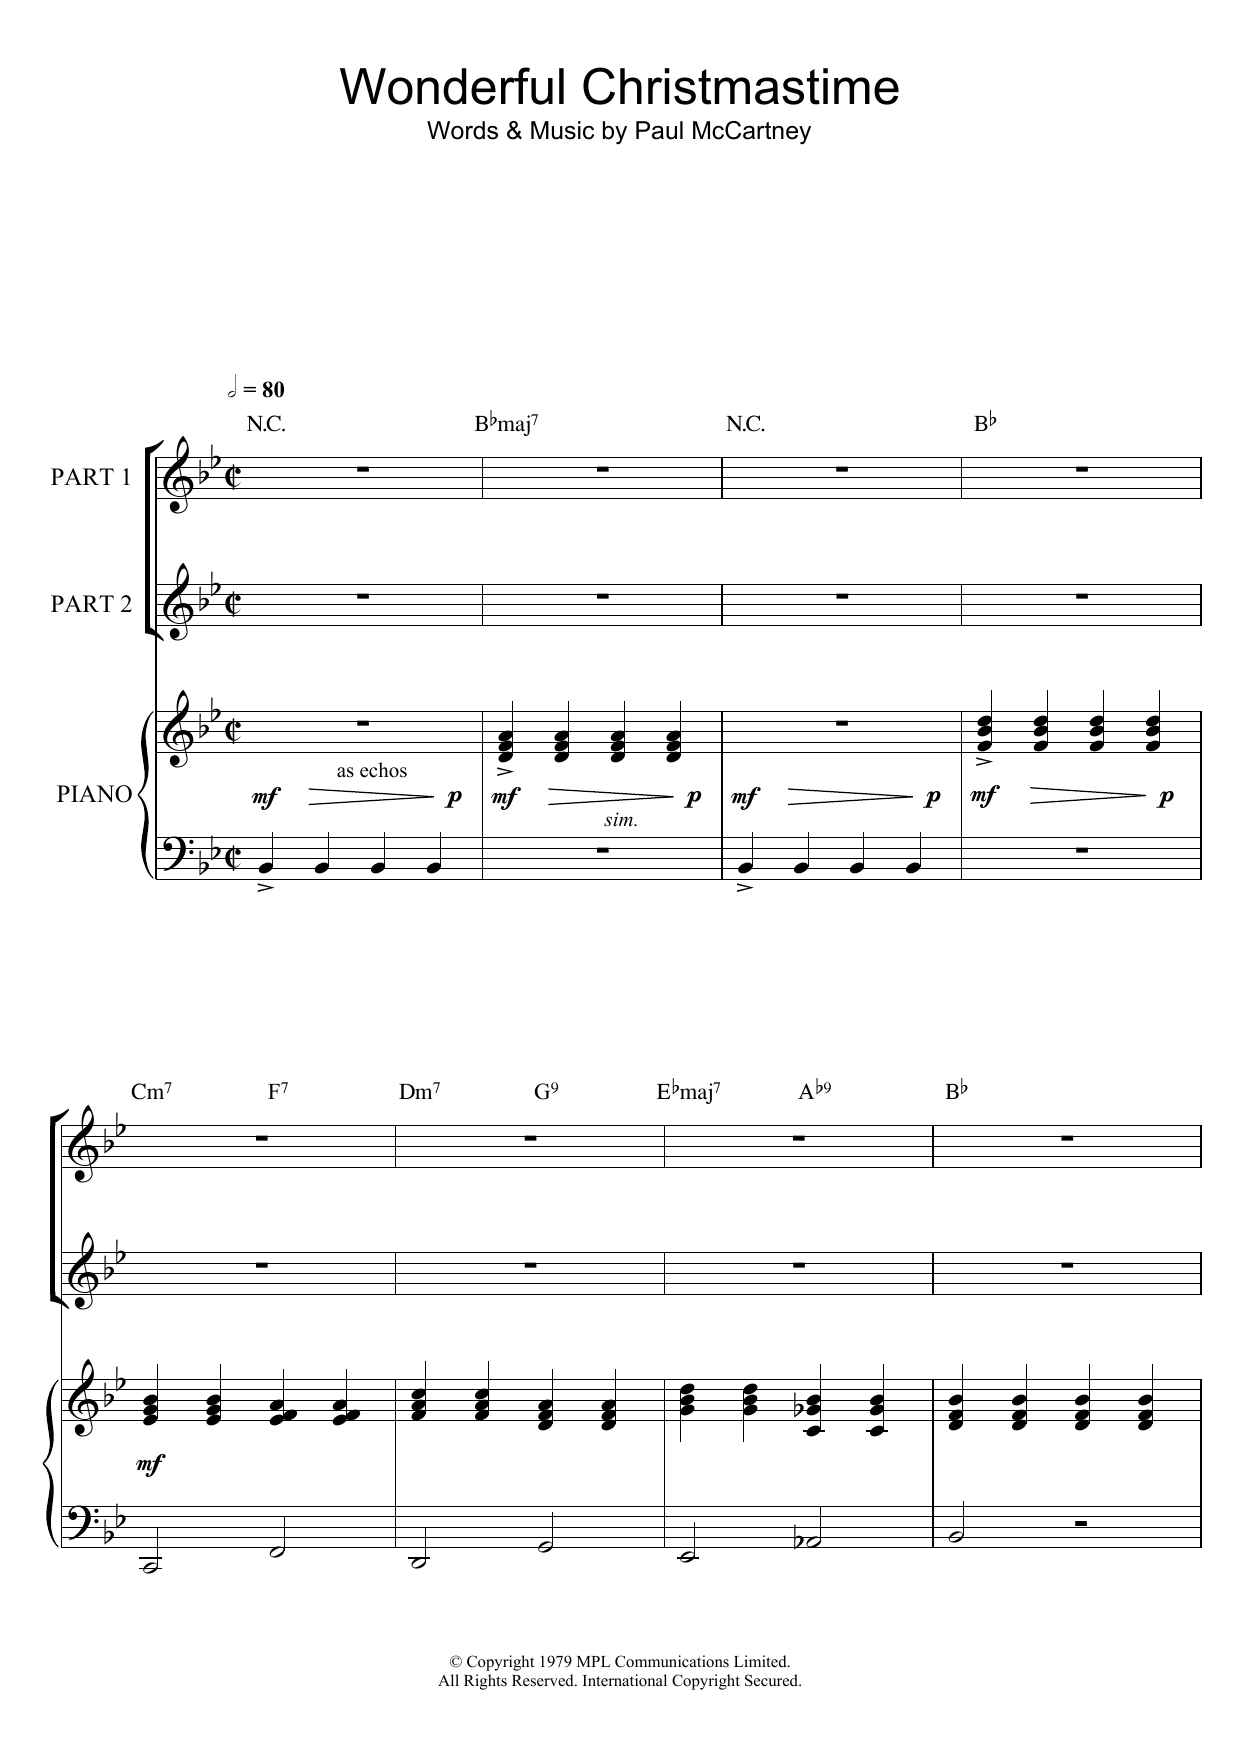 Paul McCartney Wonderful Christmastime (arr. Rick Hein) Sheet Music Notes & Chords for 2-Part Choir - Download or Print PDF